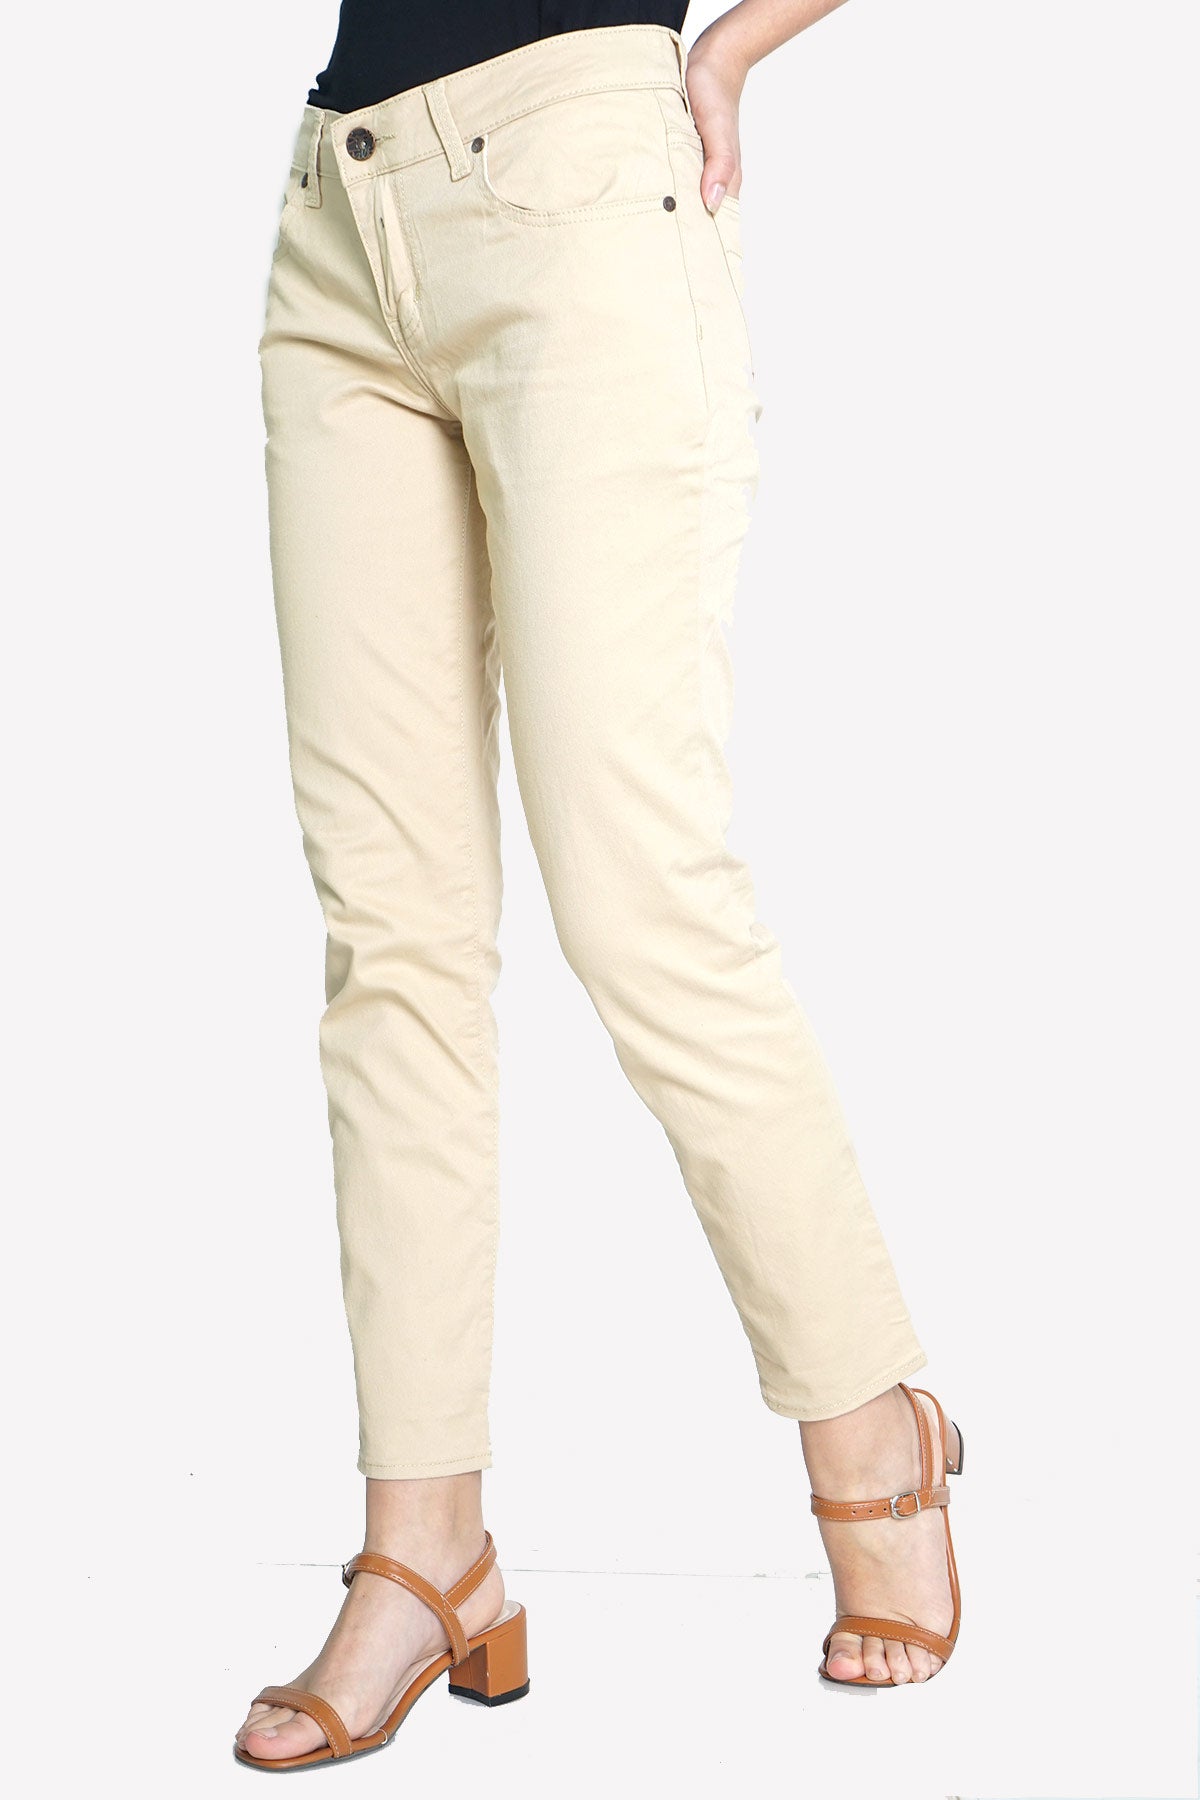 Jeans Skinny 73 Series Cream Pants